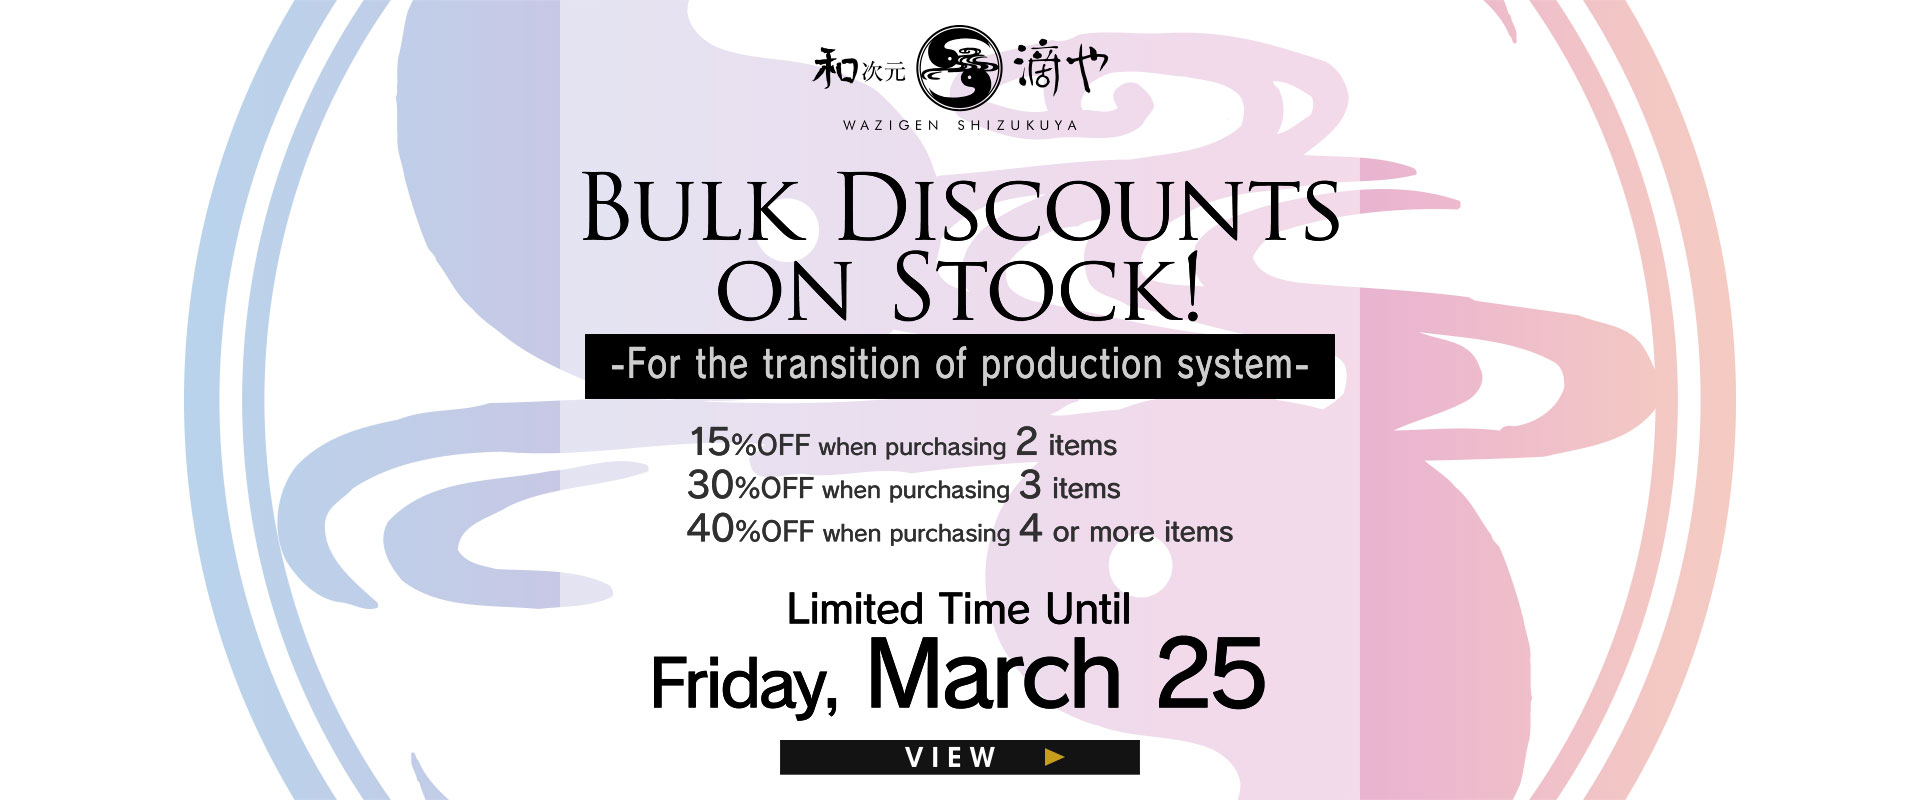 [PHOTO:Bulk Discounts on Stock!]